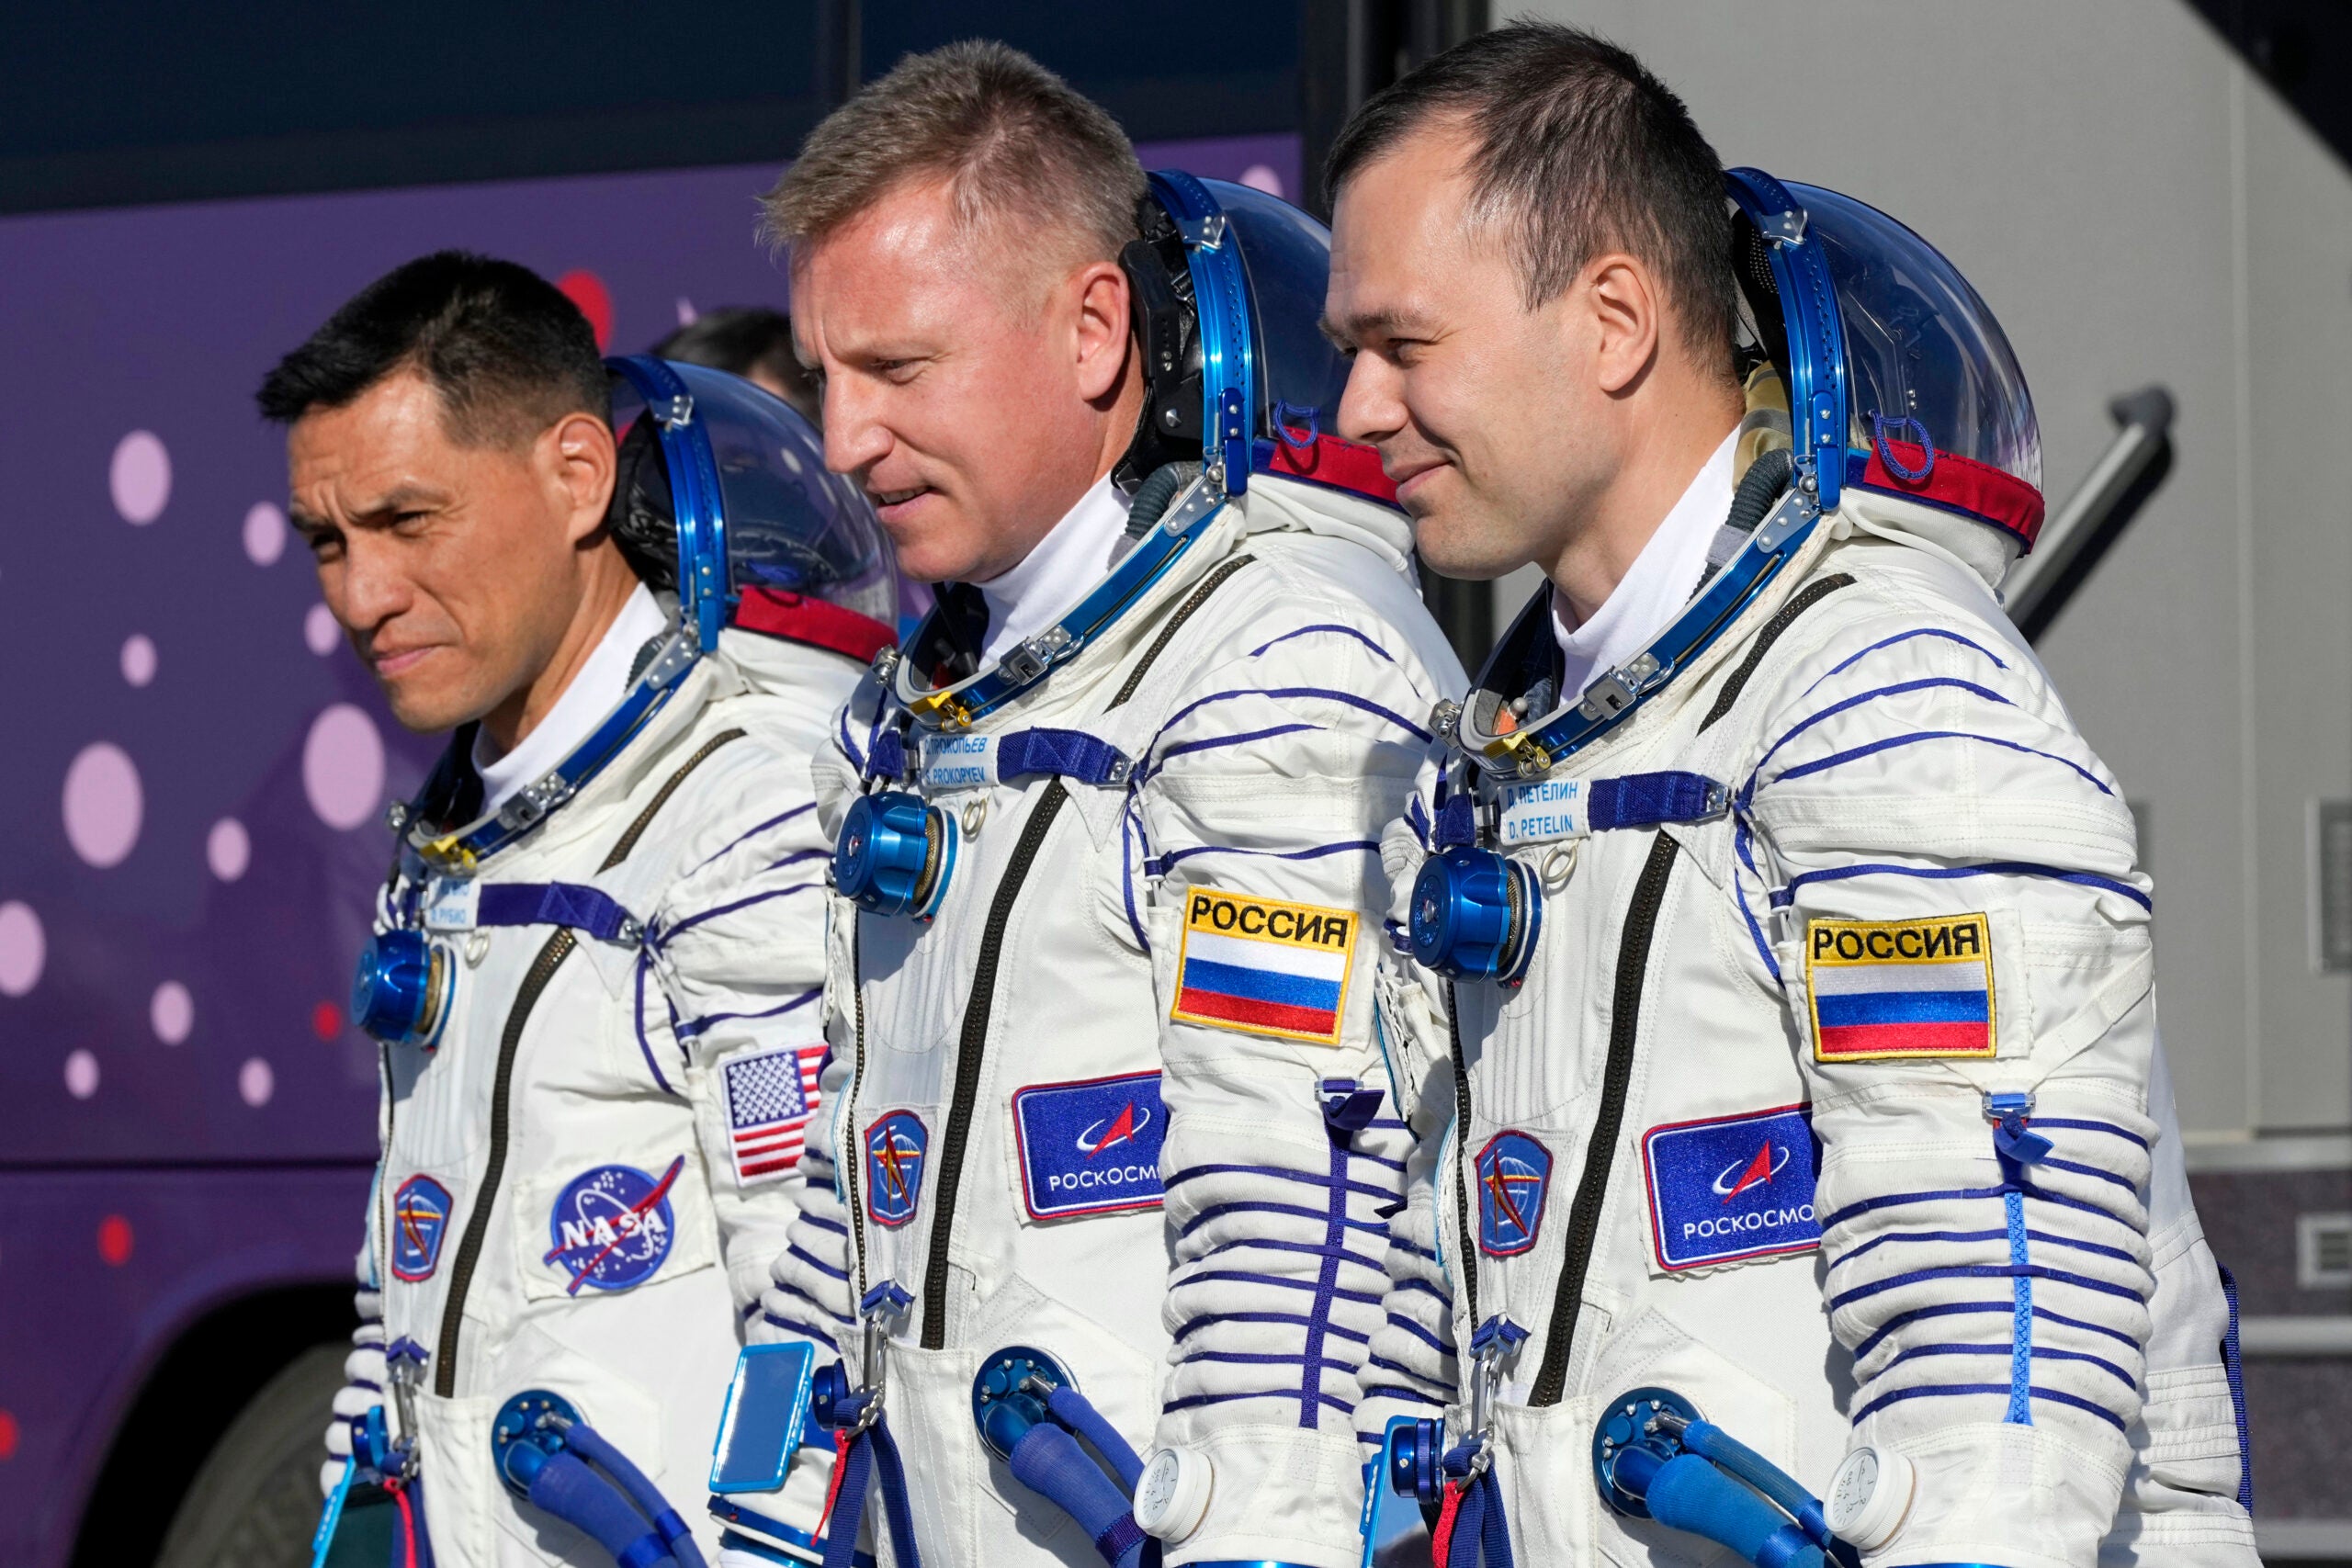 NASA astronaut Frank Rubio, Roscosmos cosmonauts Sergey Prokopyev and Dmitri Petelin, crew members of the mission to the International Space Station.